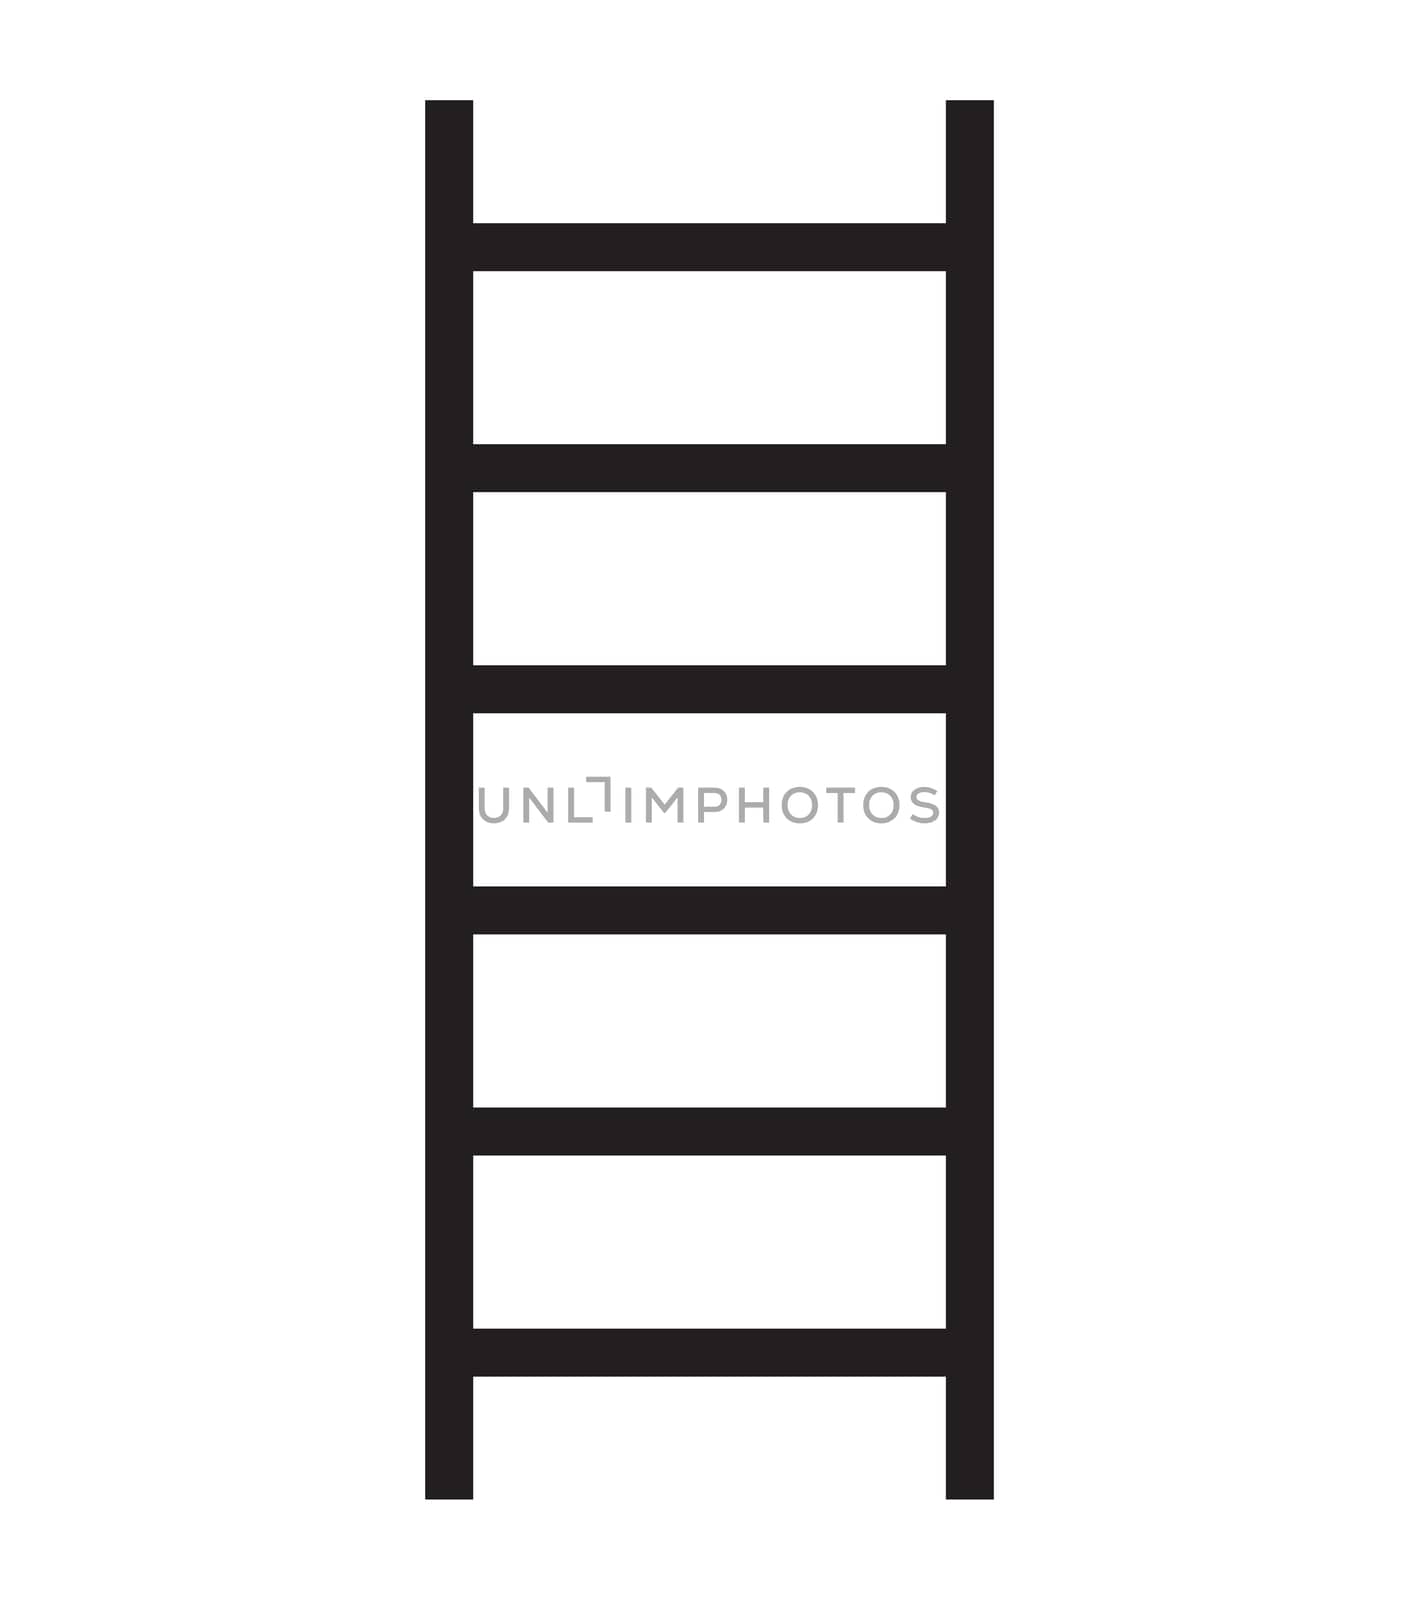 ladder Icon on white background. ladder symbol. flat style. ladder icon for your web site design, logo, app, UI. 